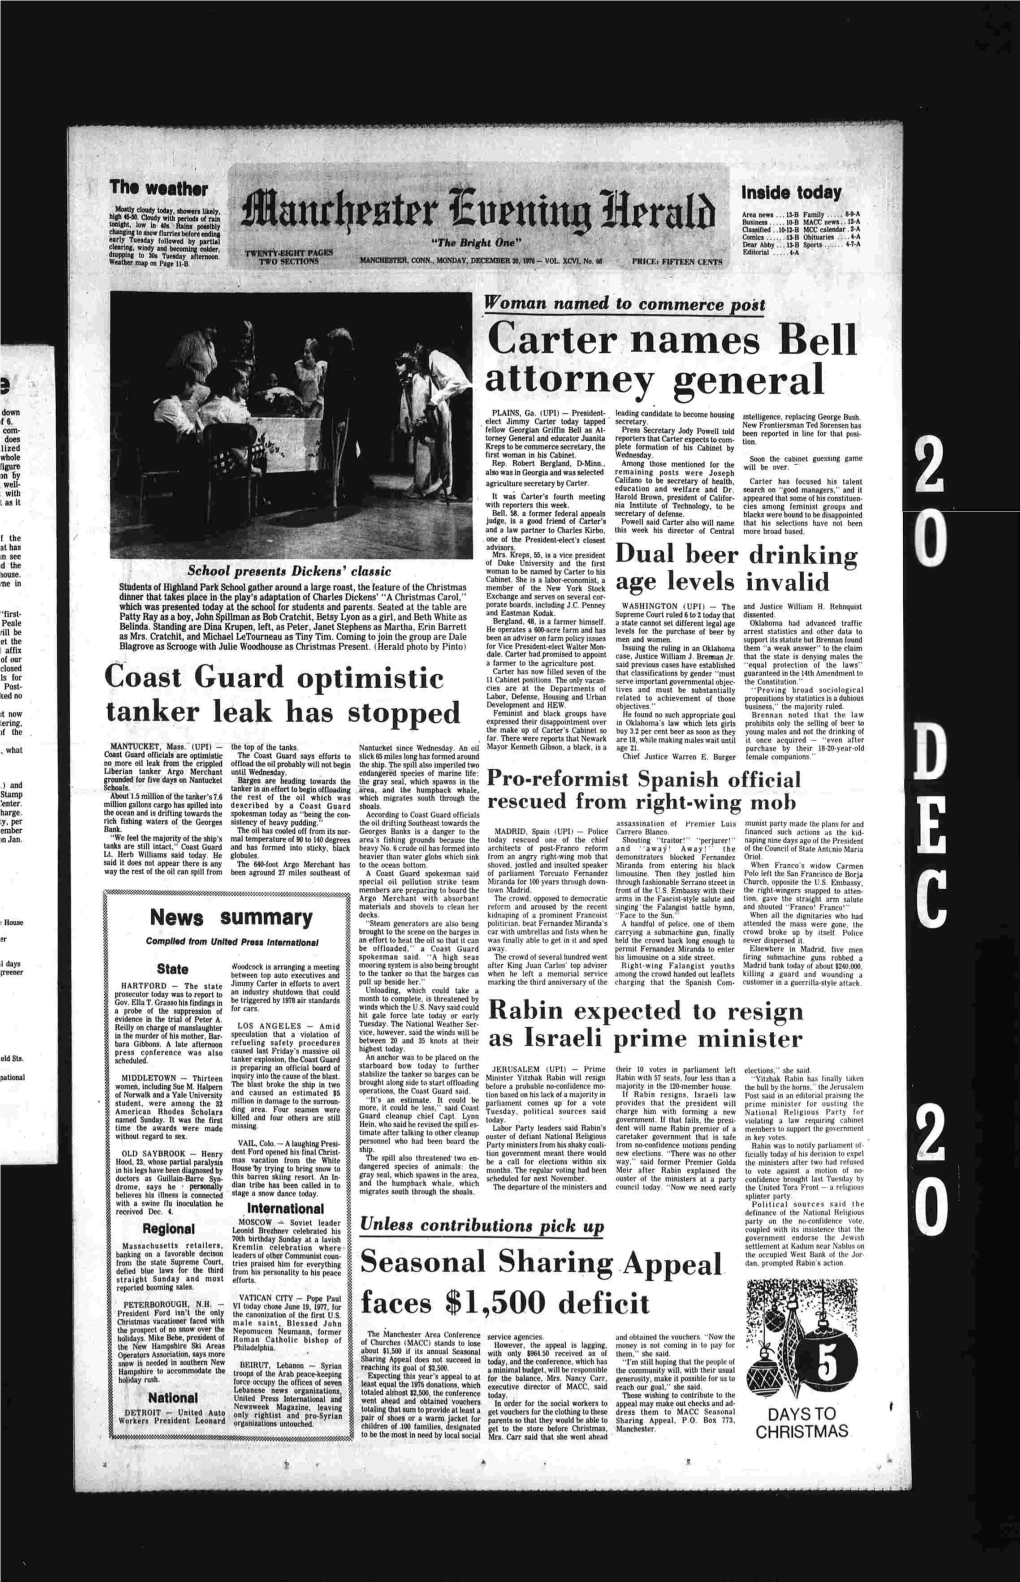 Carter Names Bell Attorney General Down PLAINS, Ga